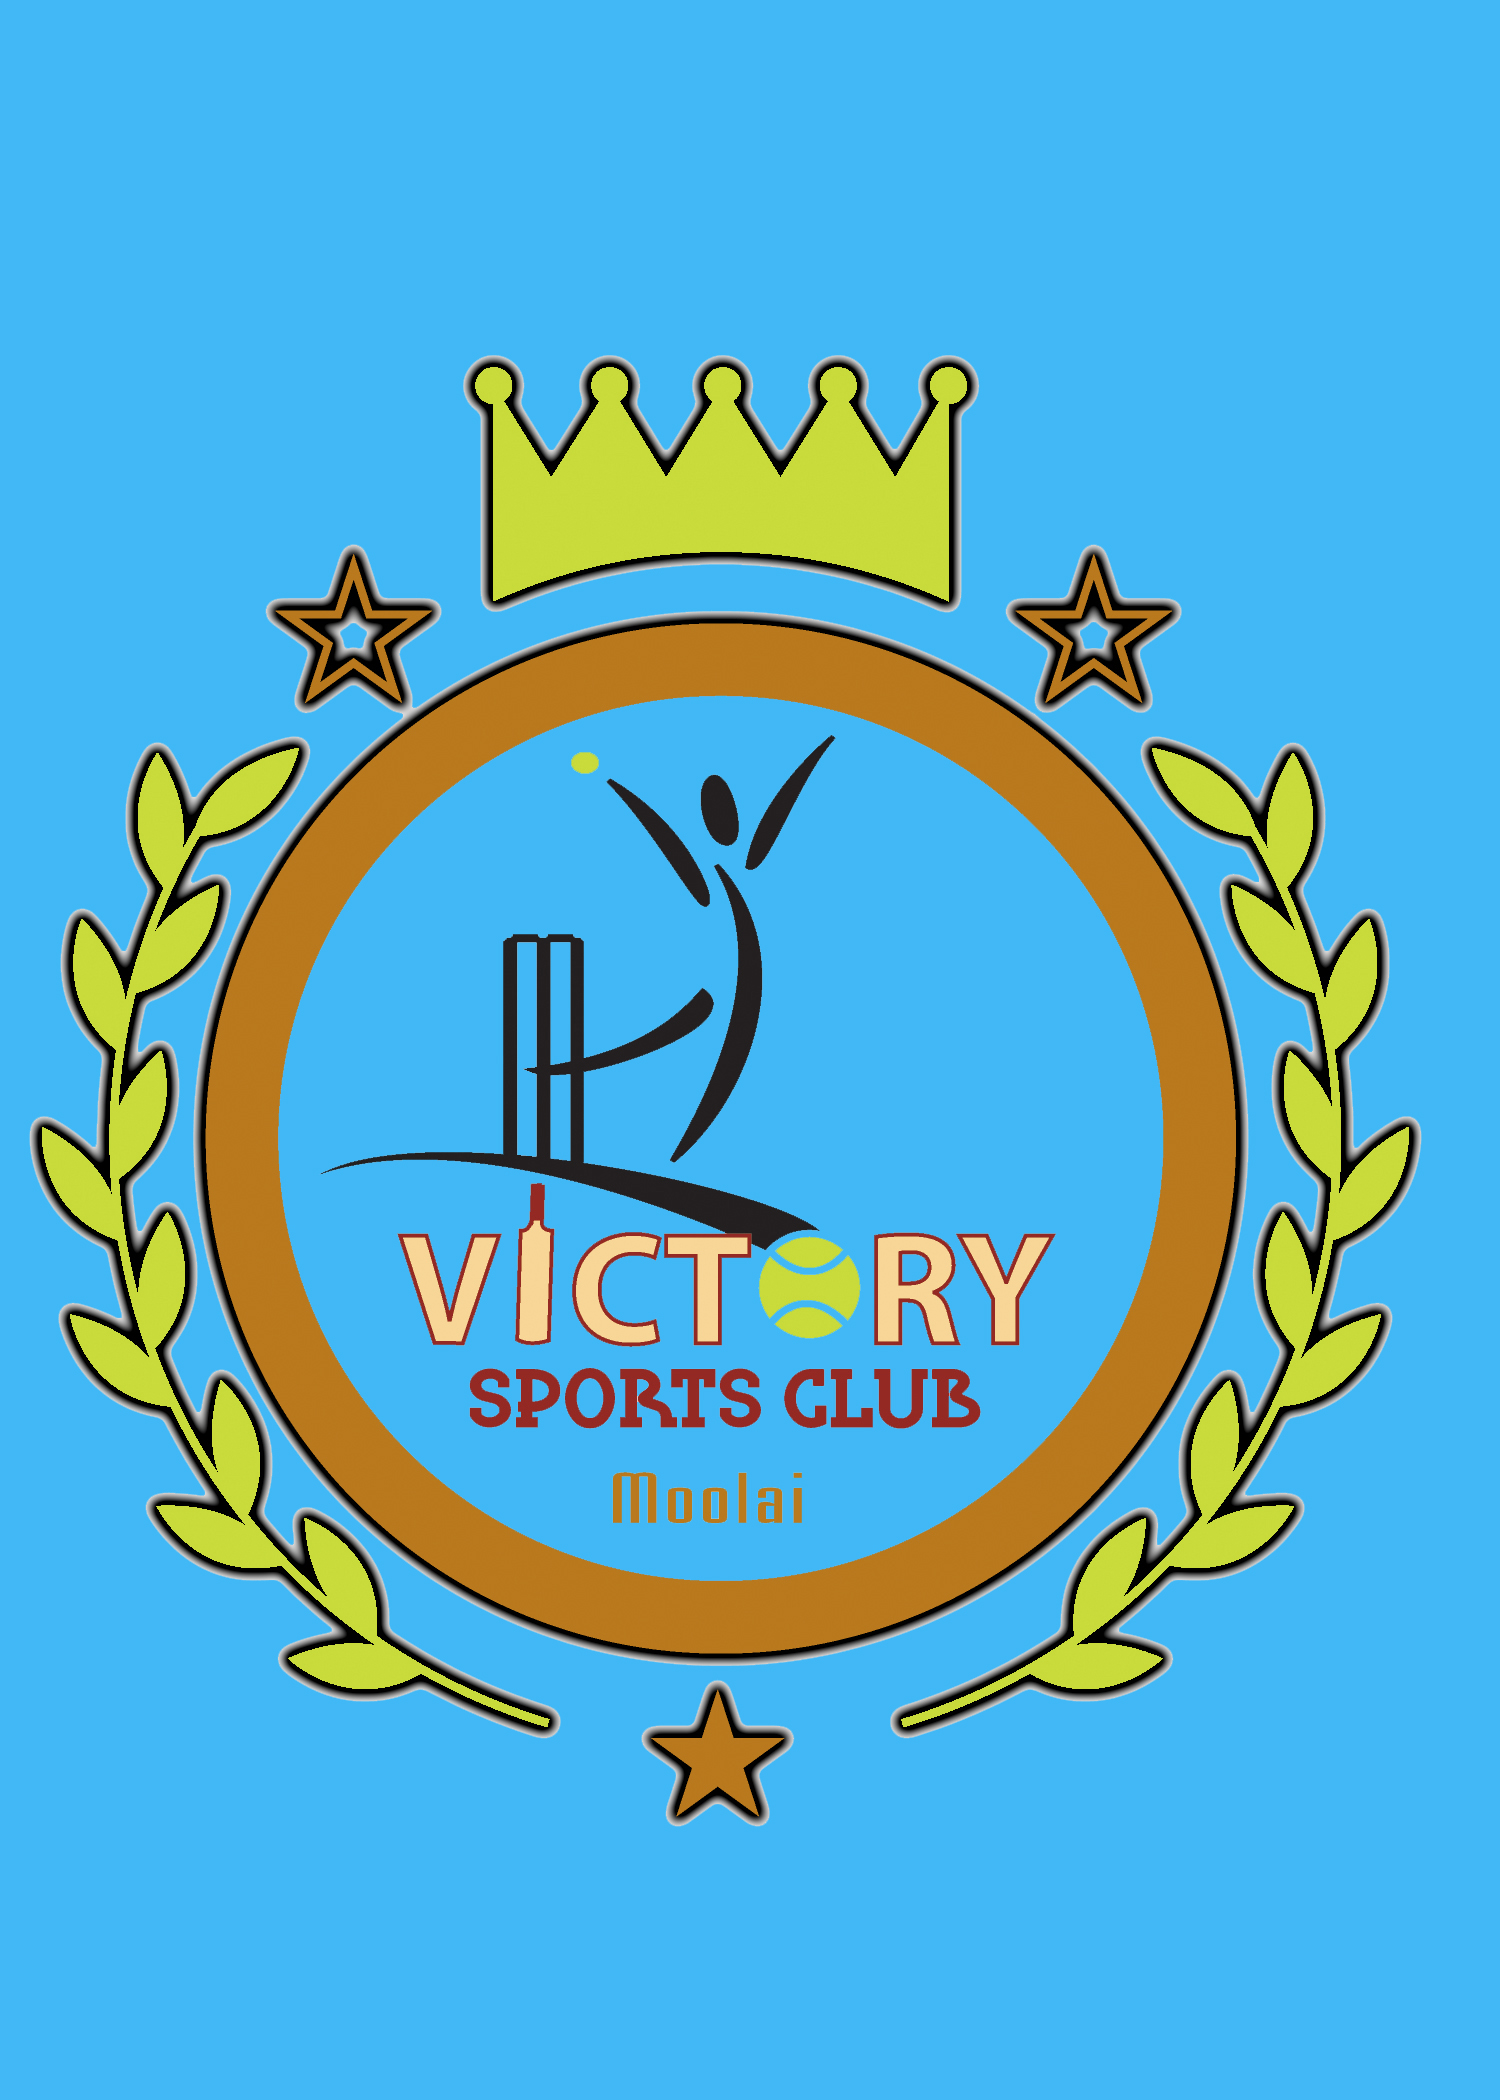 Victory Sports Club logo